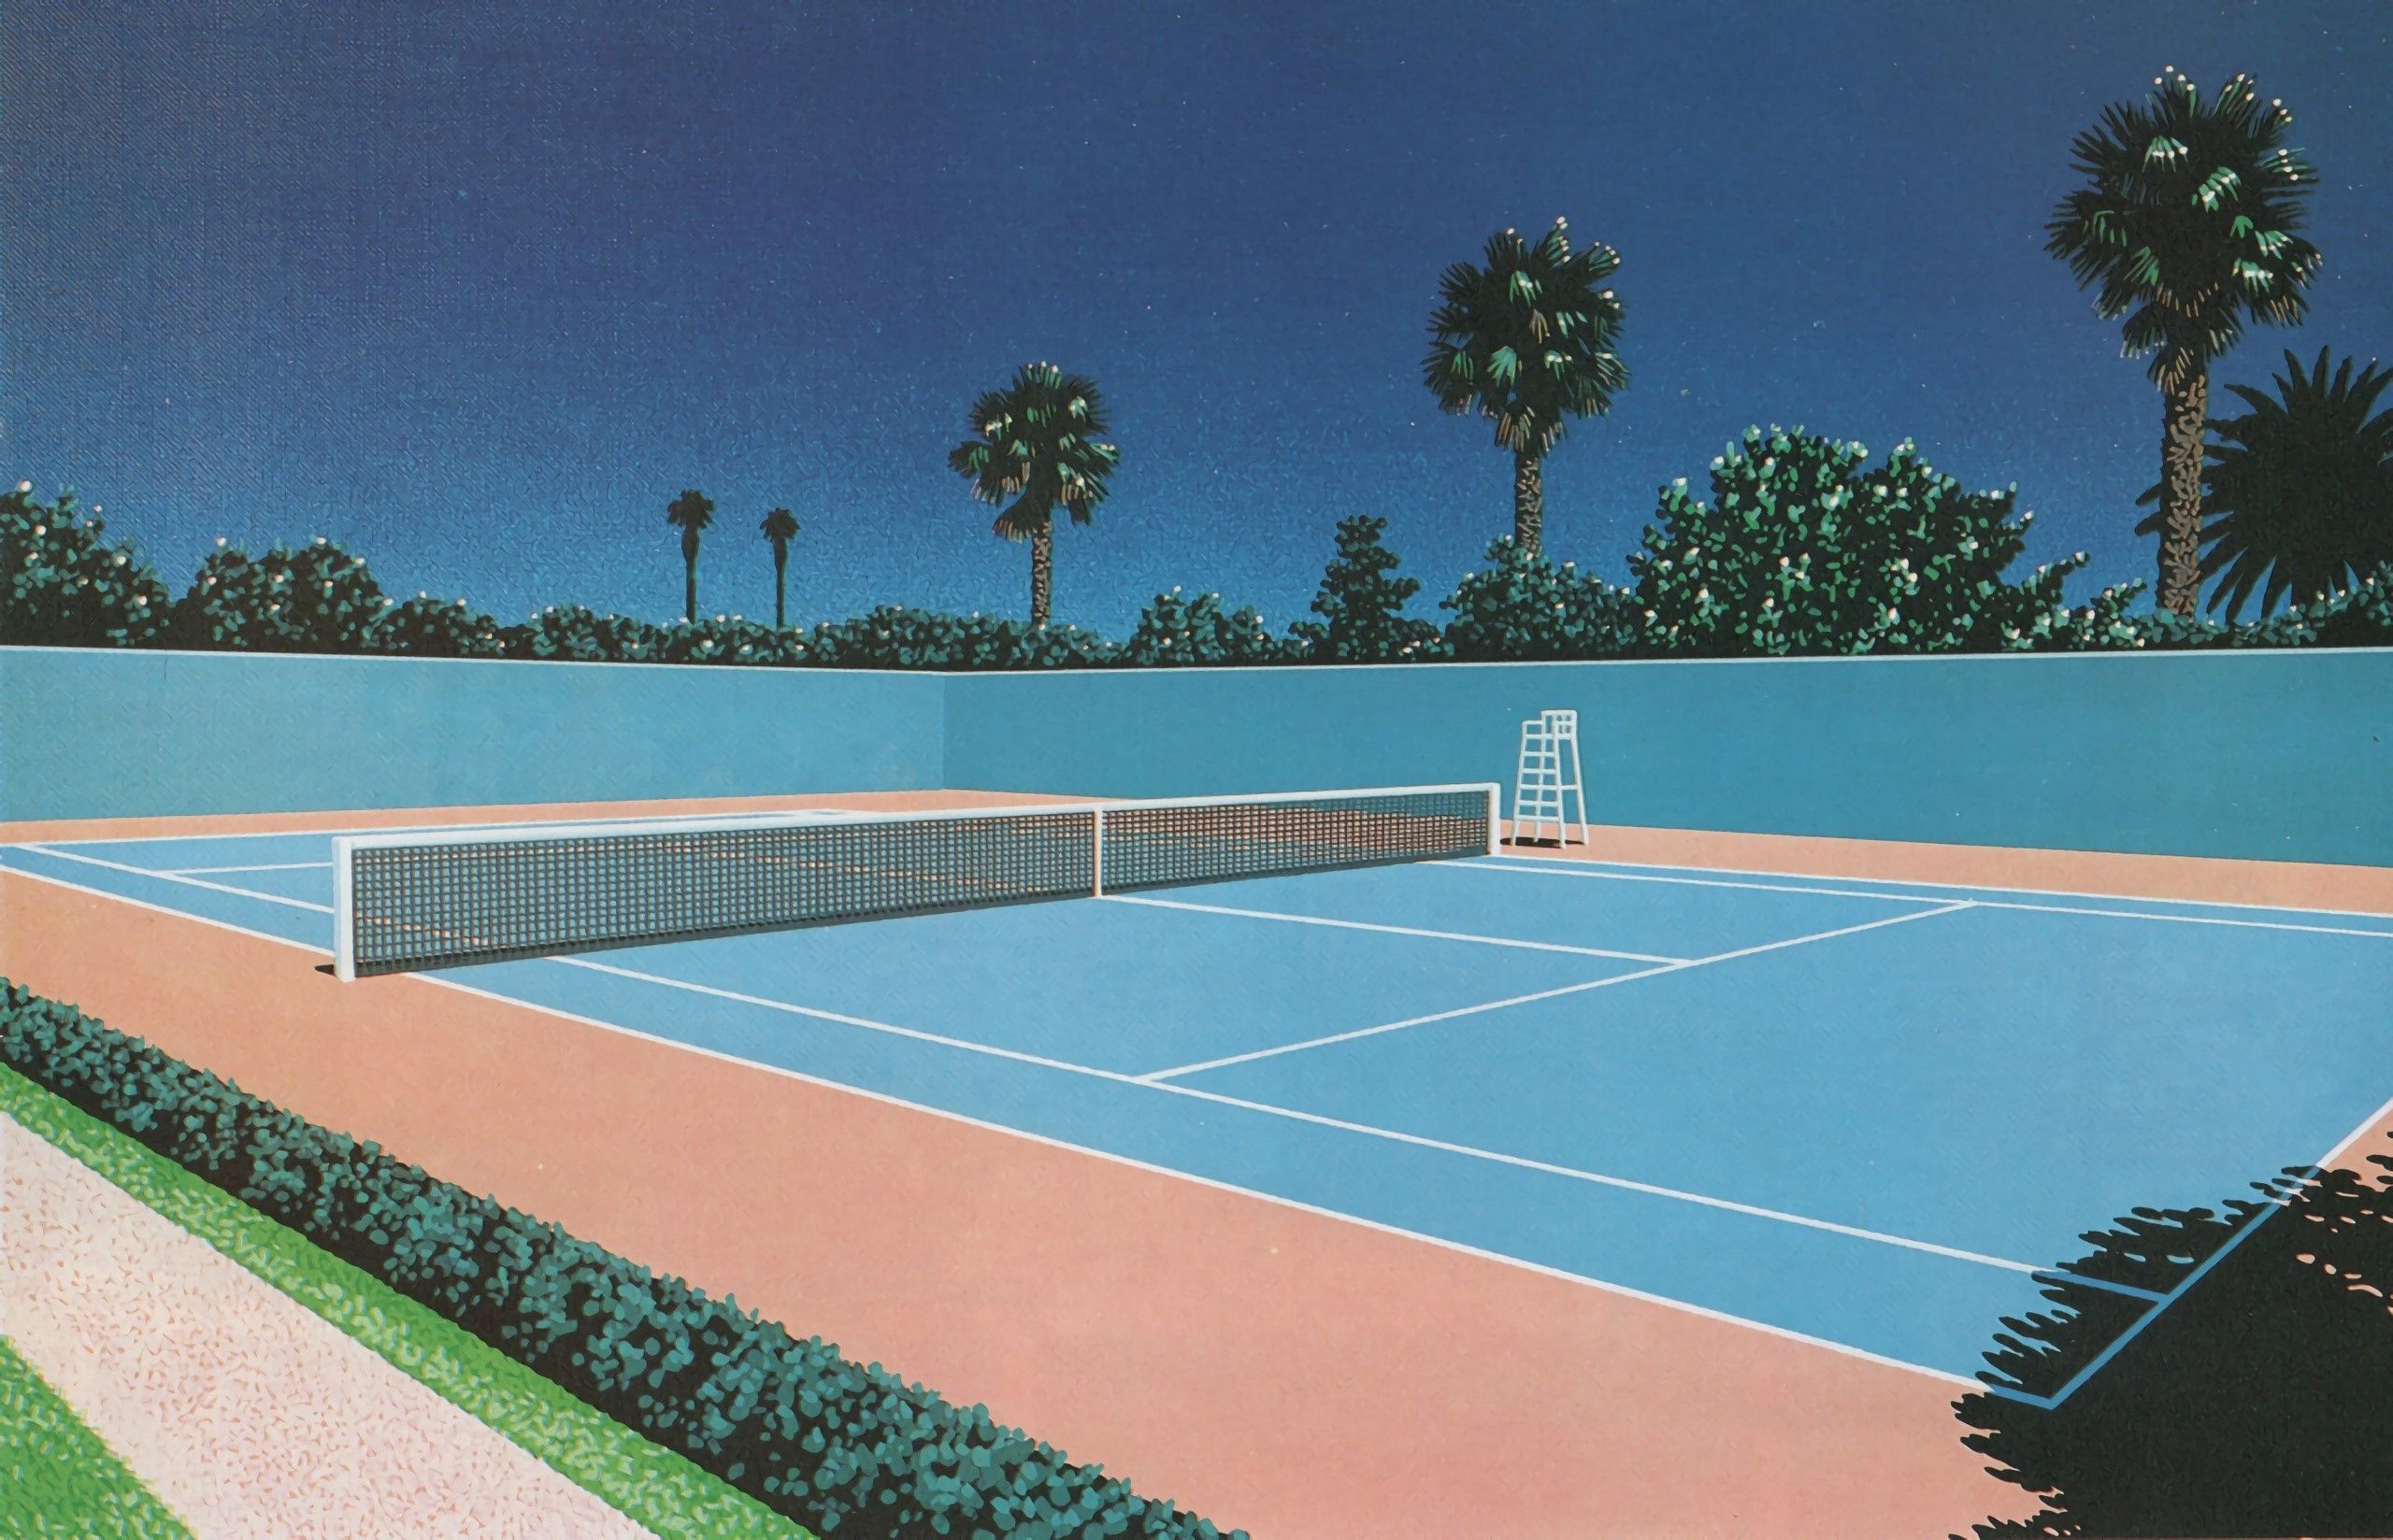 Retrowave, 1980s, painting, tennis court Gallery HD Wallpaper